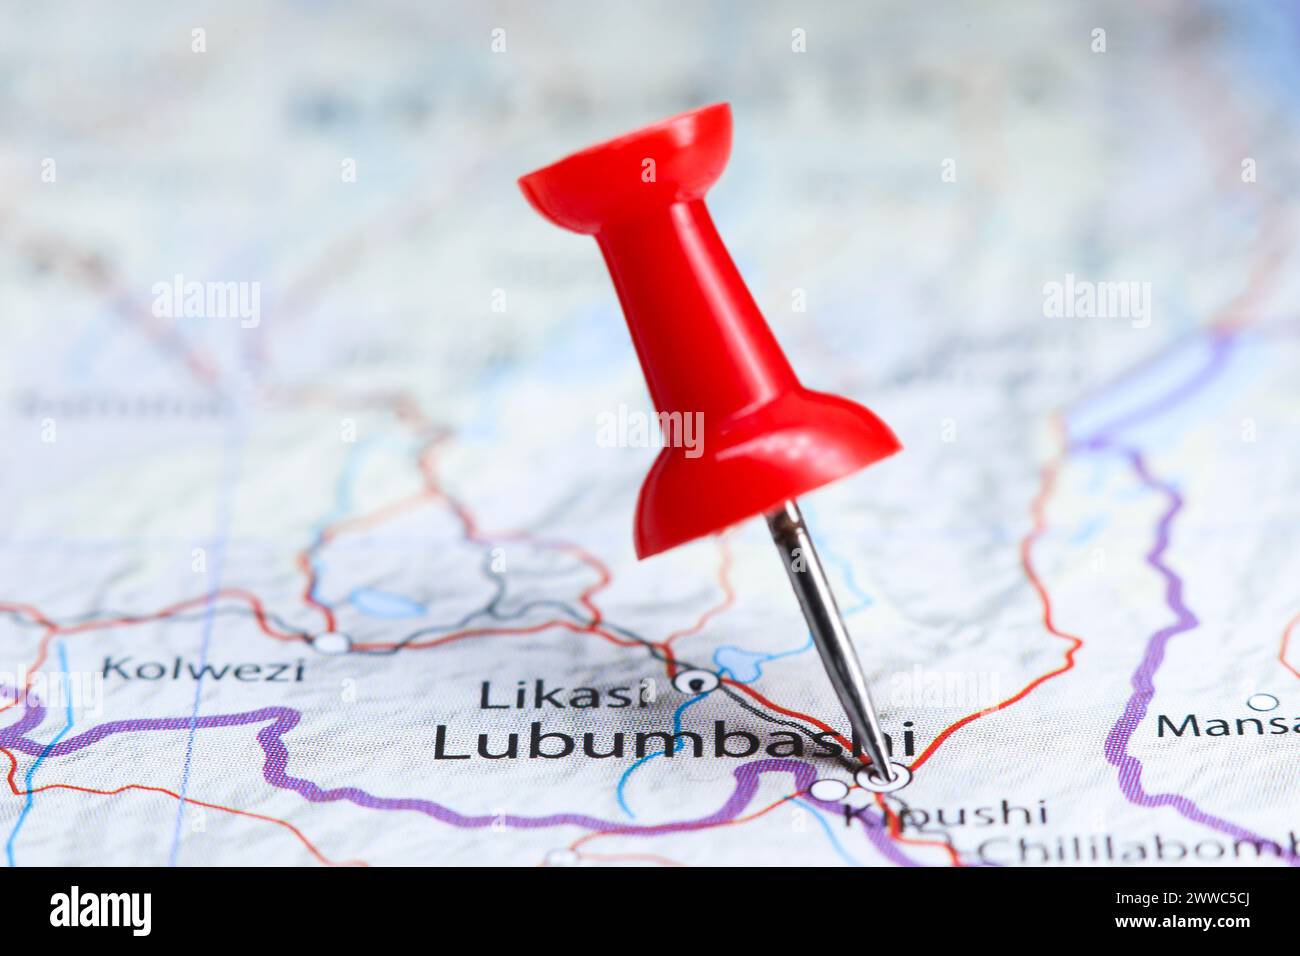 Lubumbashi, Congo pin on map Stock Photo